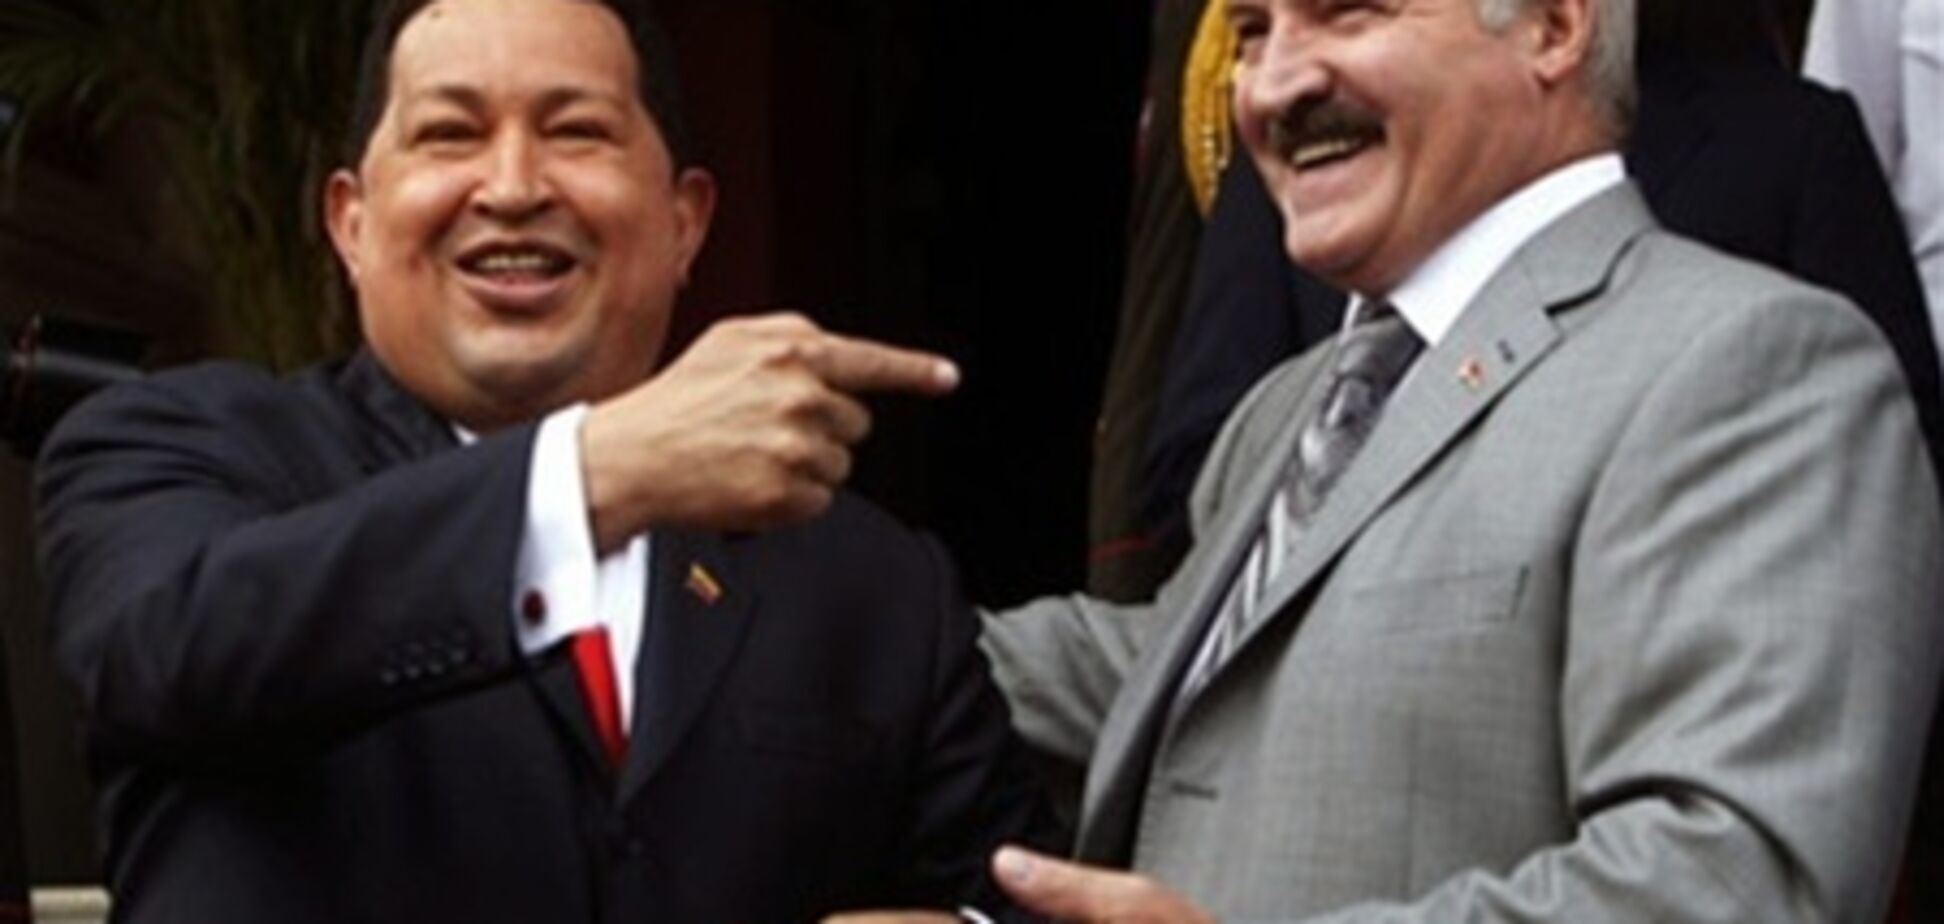 Чавес одолжил Лукашенко почти $3 миллиарда - СМИ